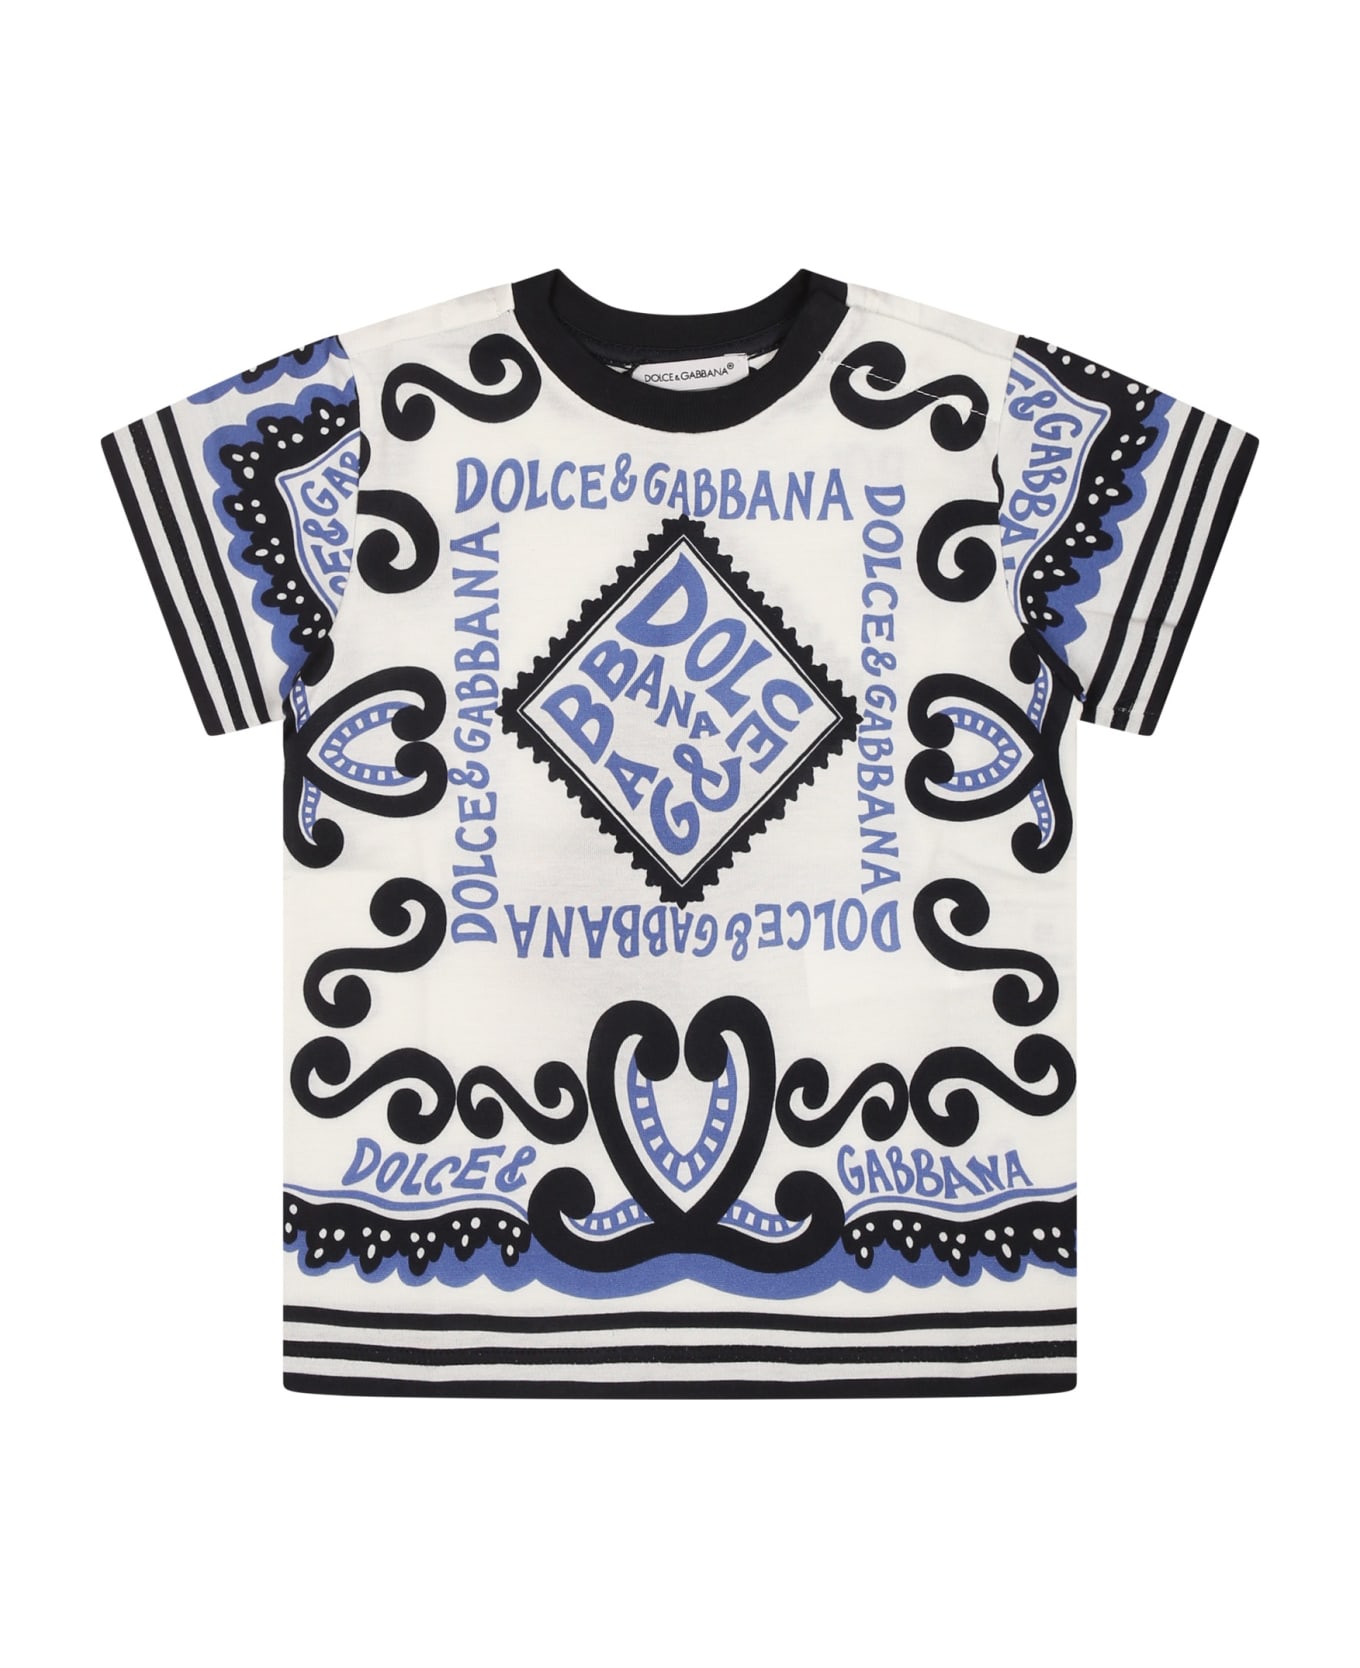 Dolce & Gabbana White T-shirt For Baby Boy With Bandana Print And Logo - White